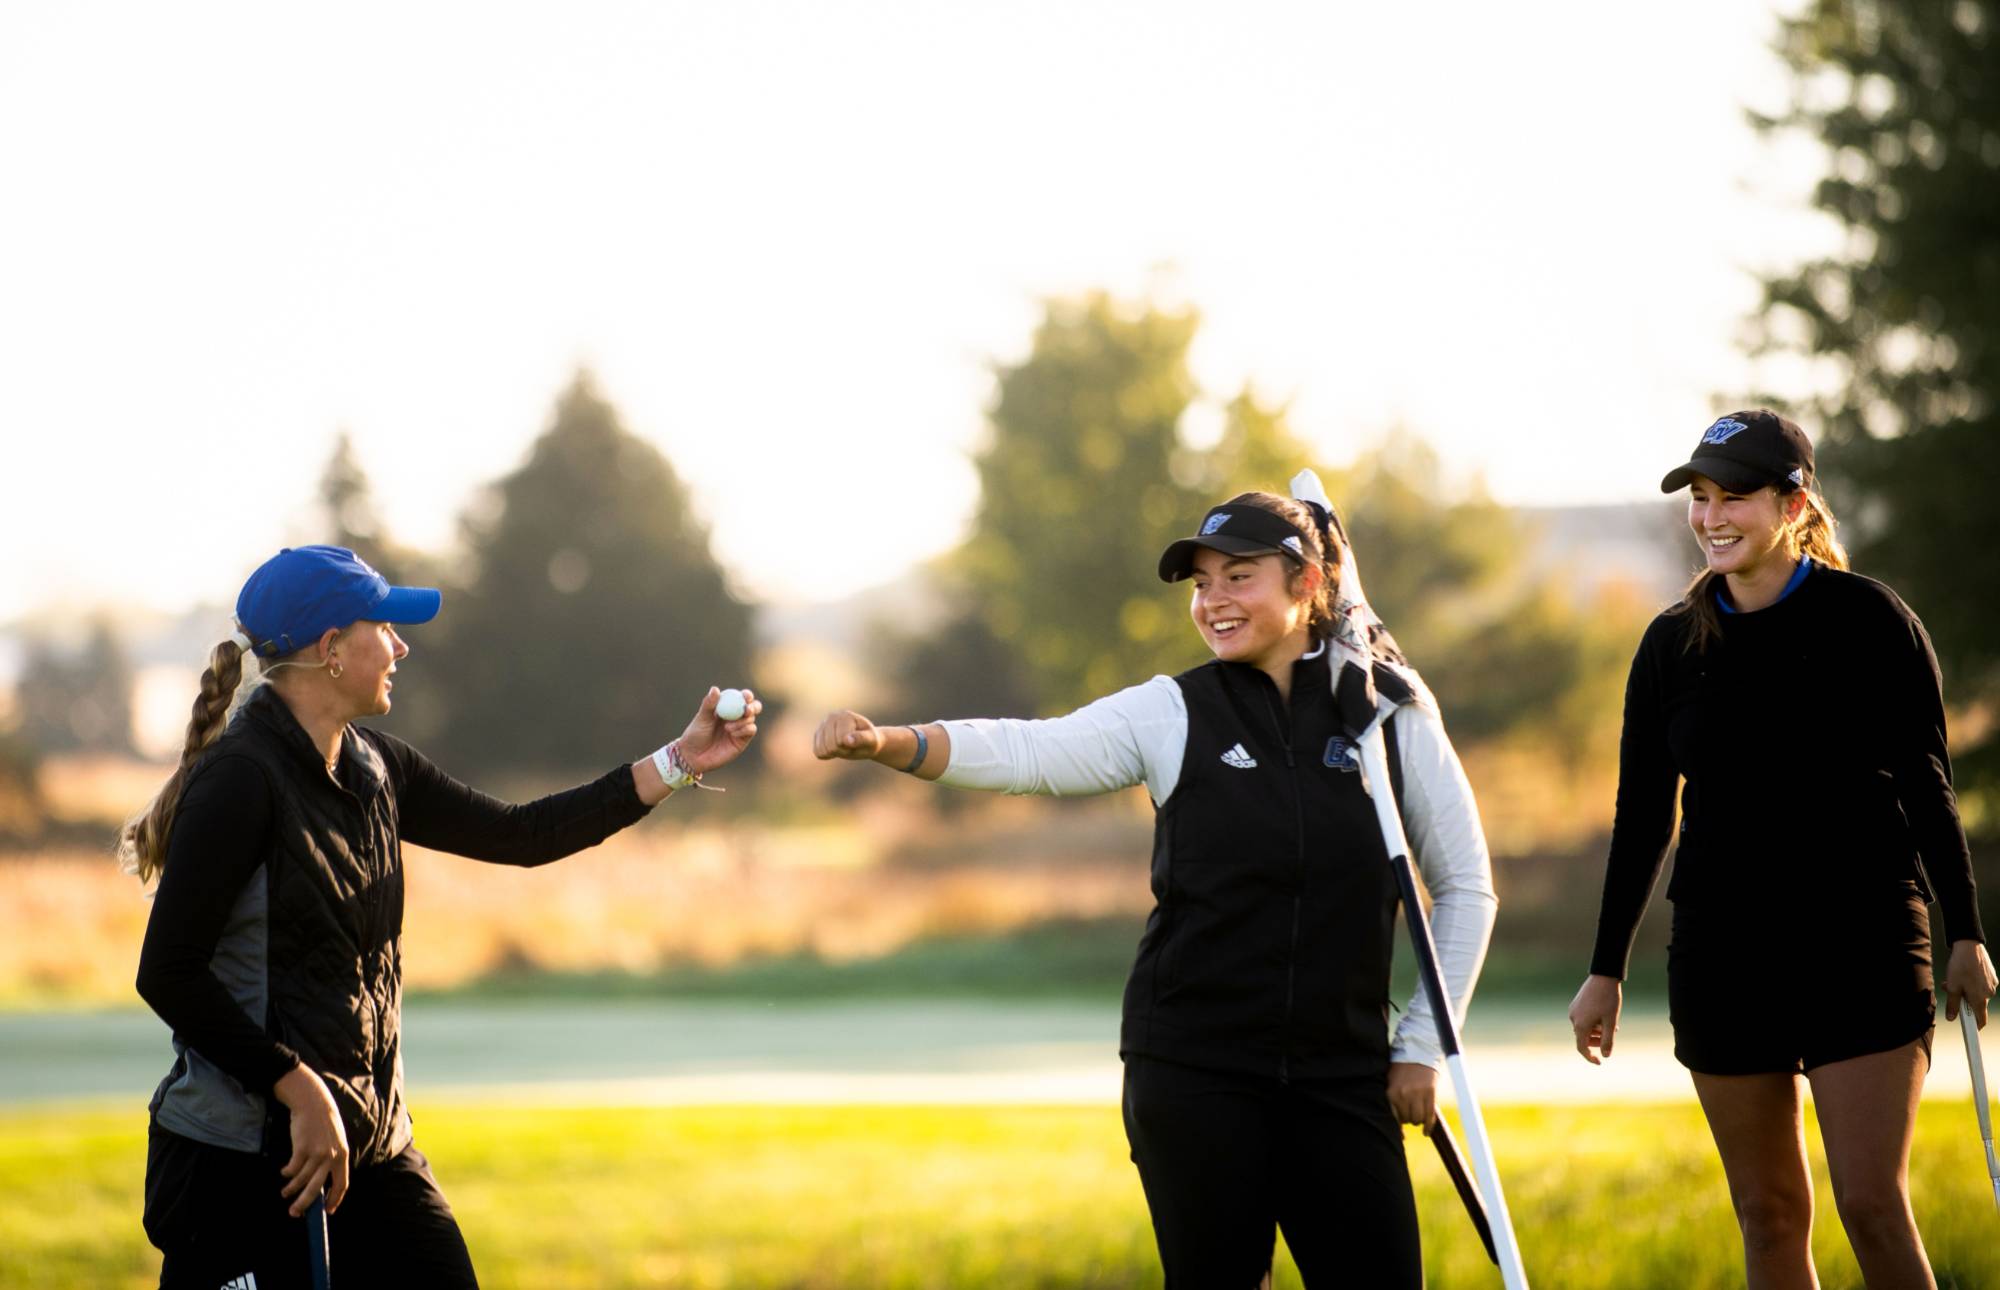 three female golfers all on the GVSU team celebrating a nice shot on the course